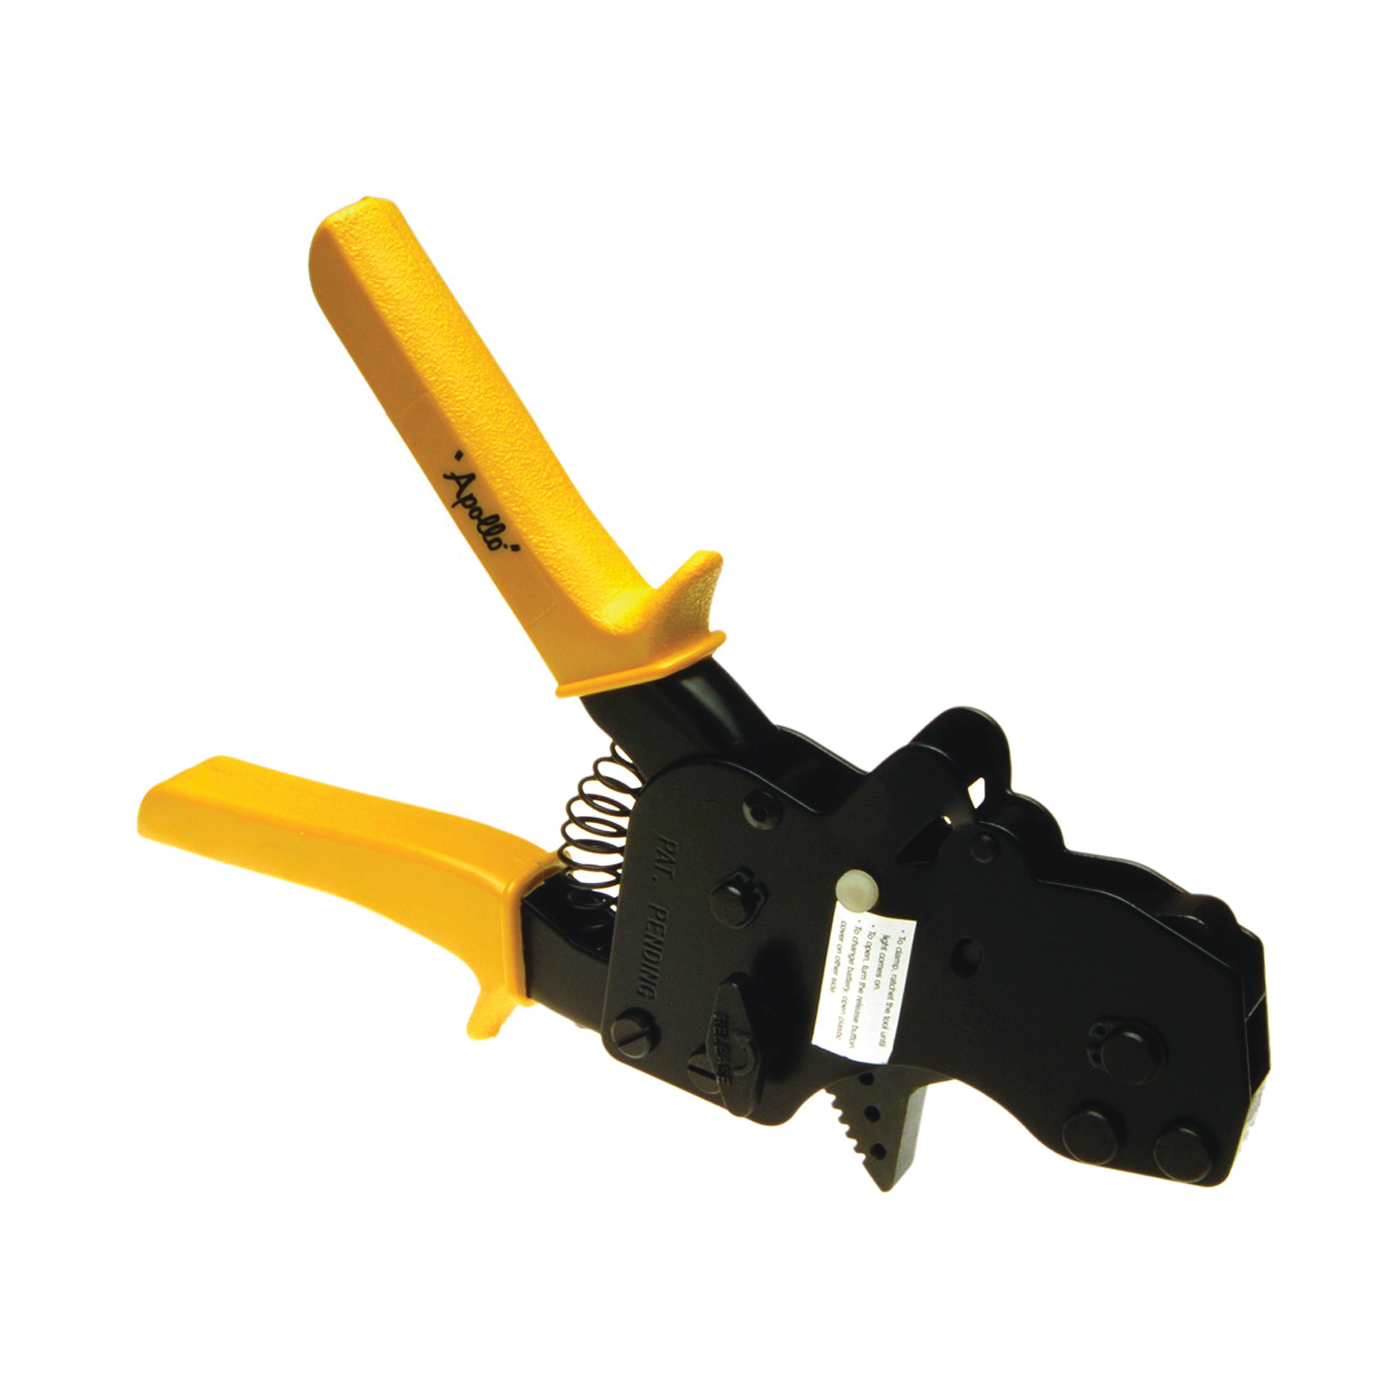 69PTBJ0010C Cinch Clamp Tool, 3/8 to 1 in Crimping, Comfort-Grip Handle